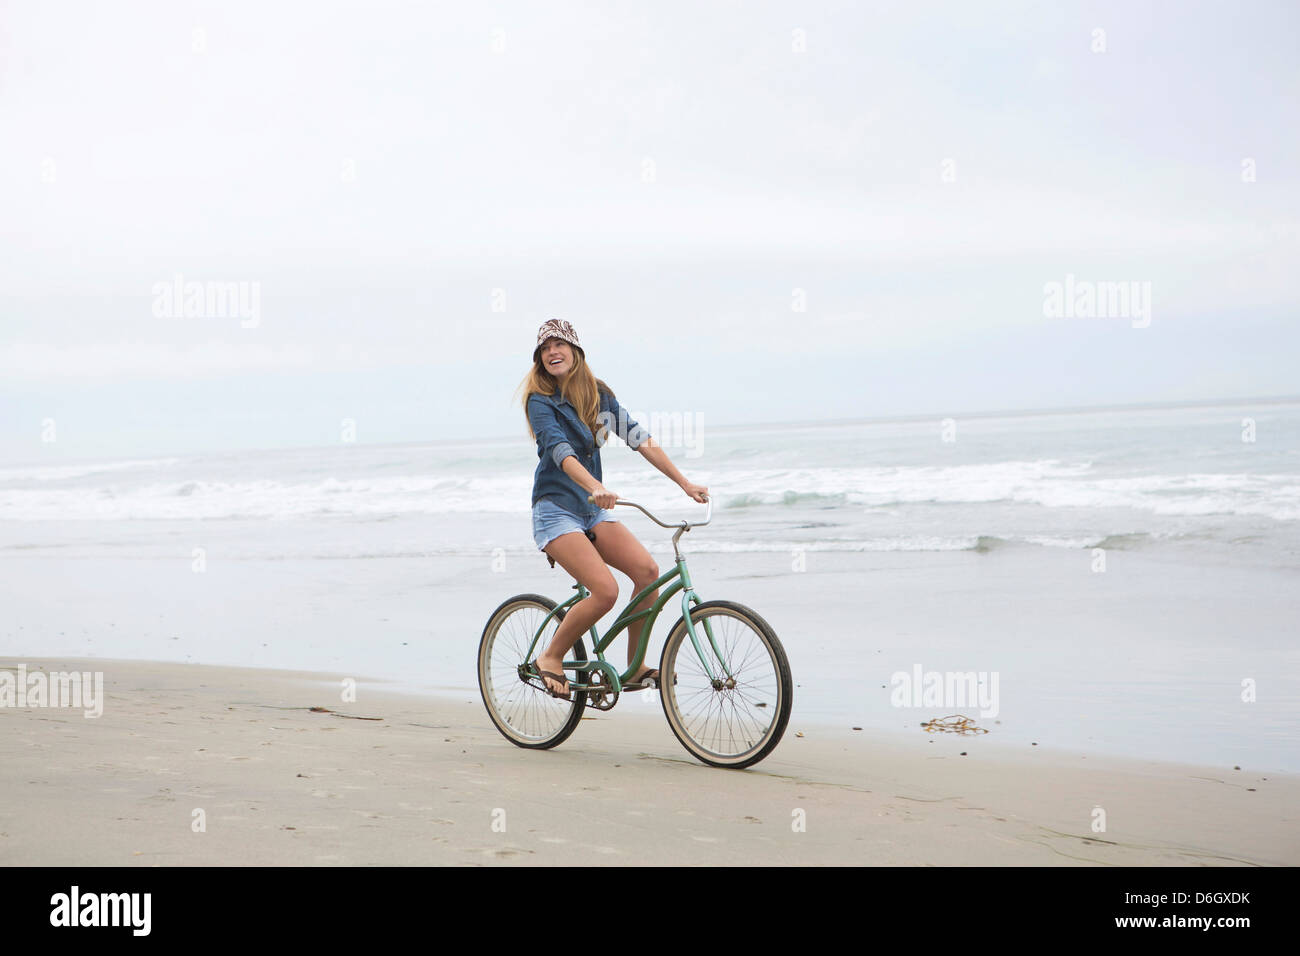 Woman riding bicycle on beach Stock Photo